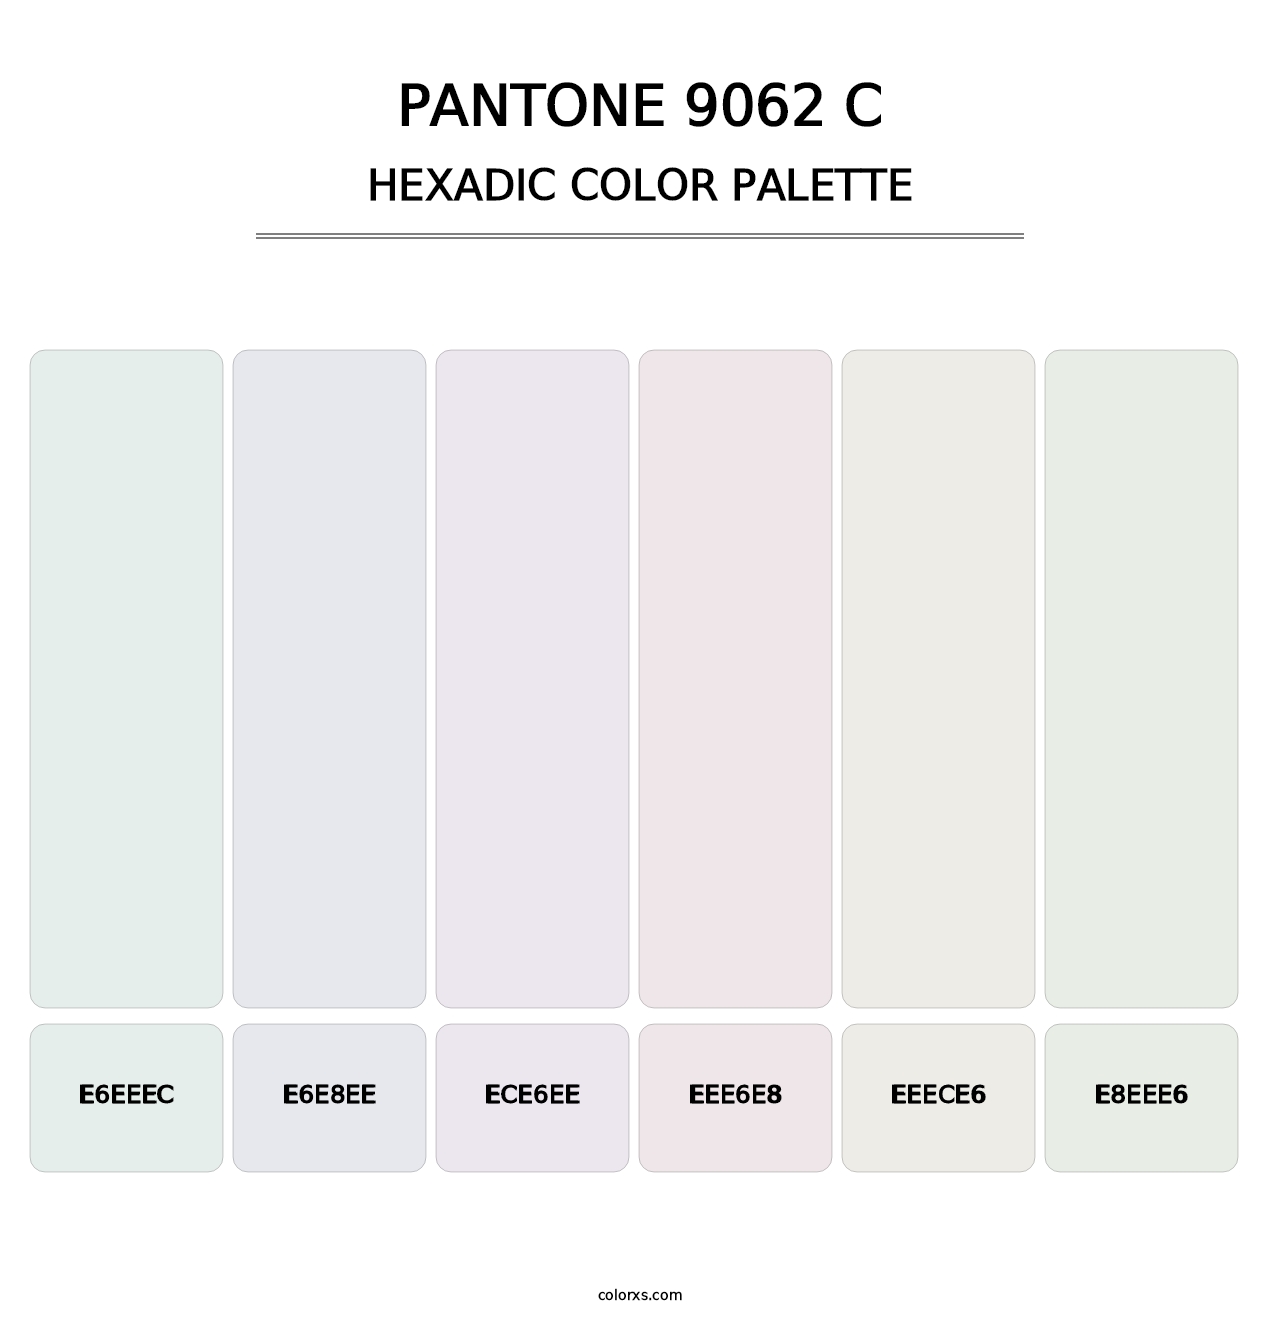 PANTONE 9062 C - Hexadic Color Palette